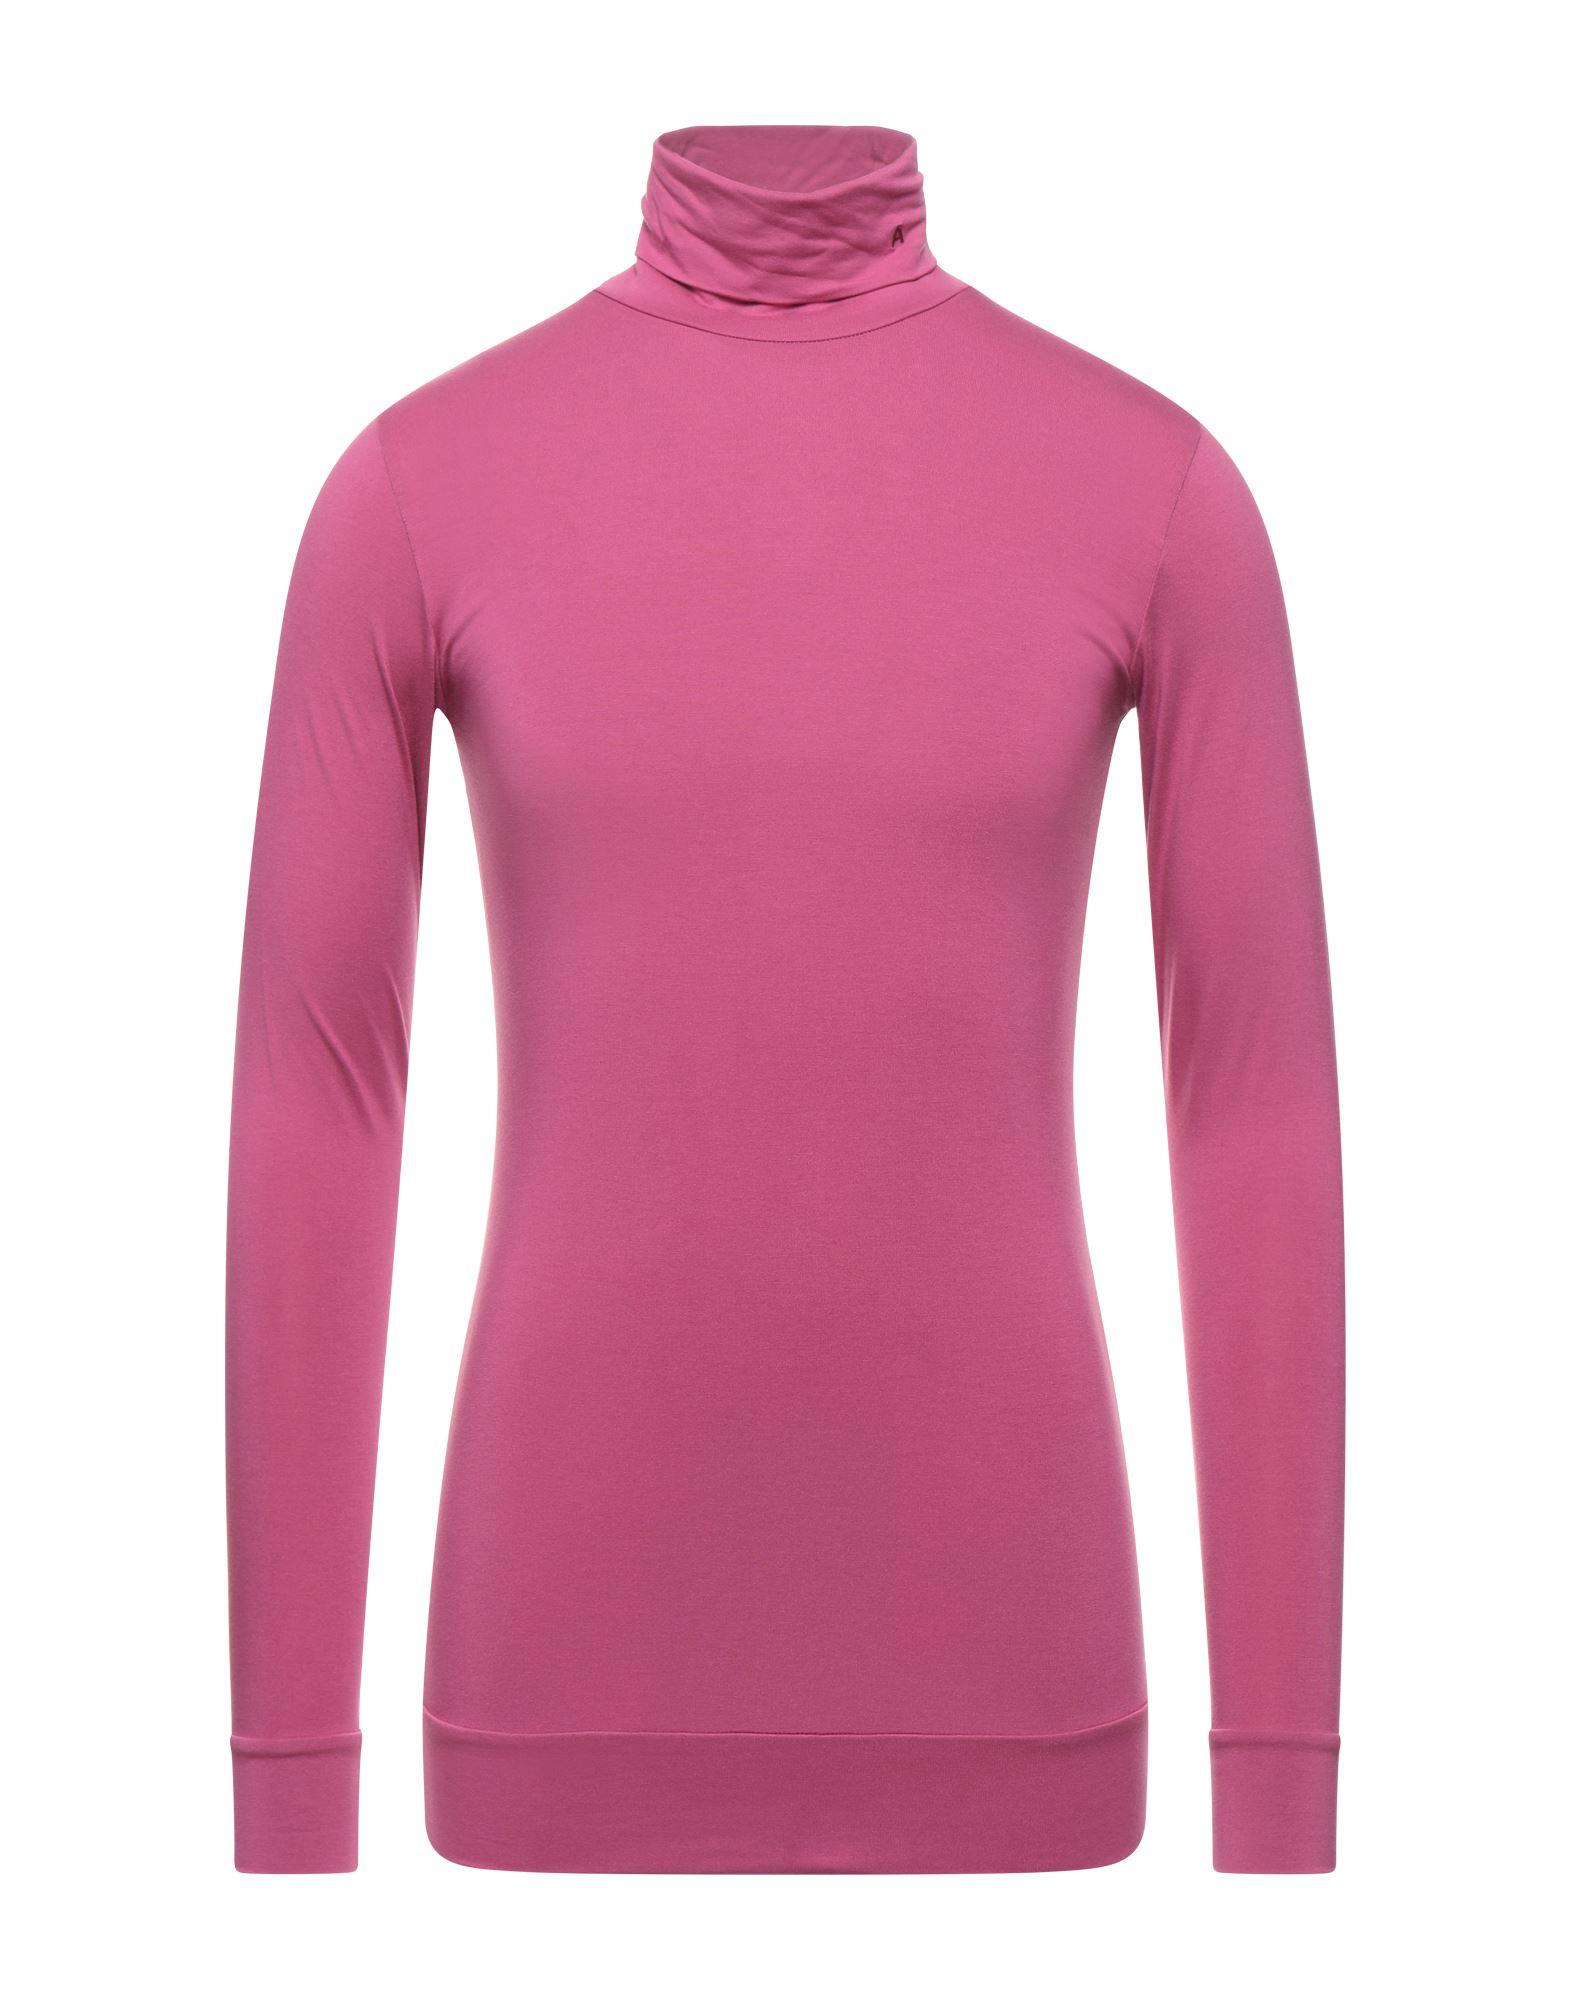 Ambush Synthetic T-shirt in Fuchsia (Pink) for Men - Lyst